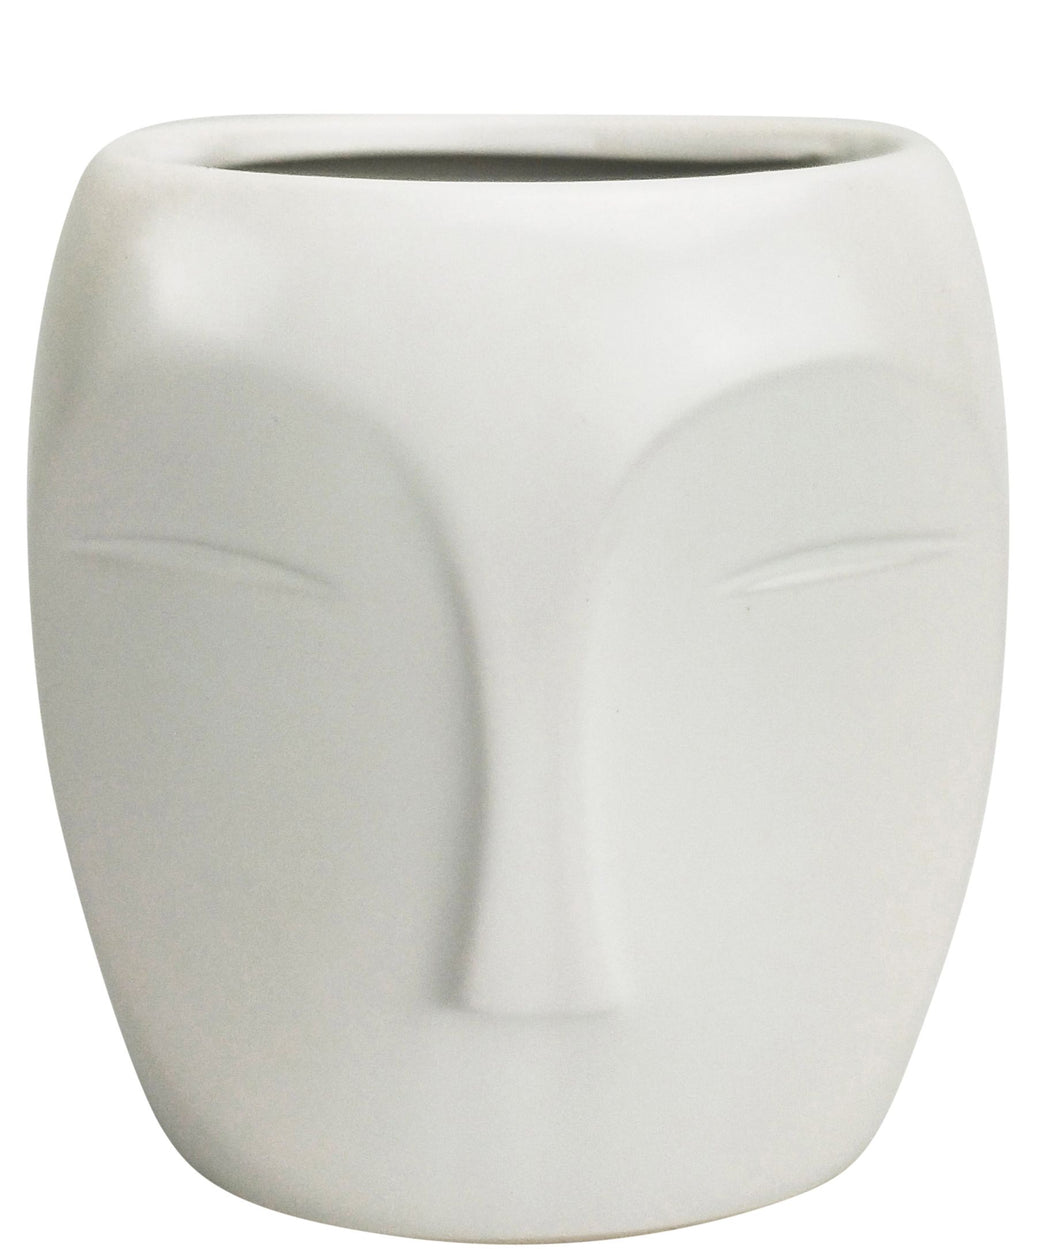 Aztec Face Vase - White Small